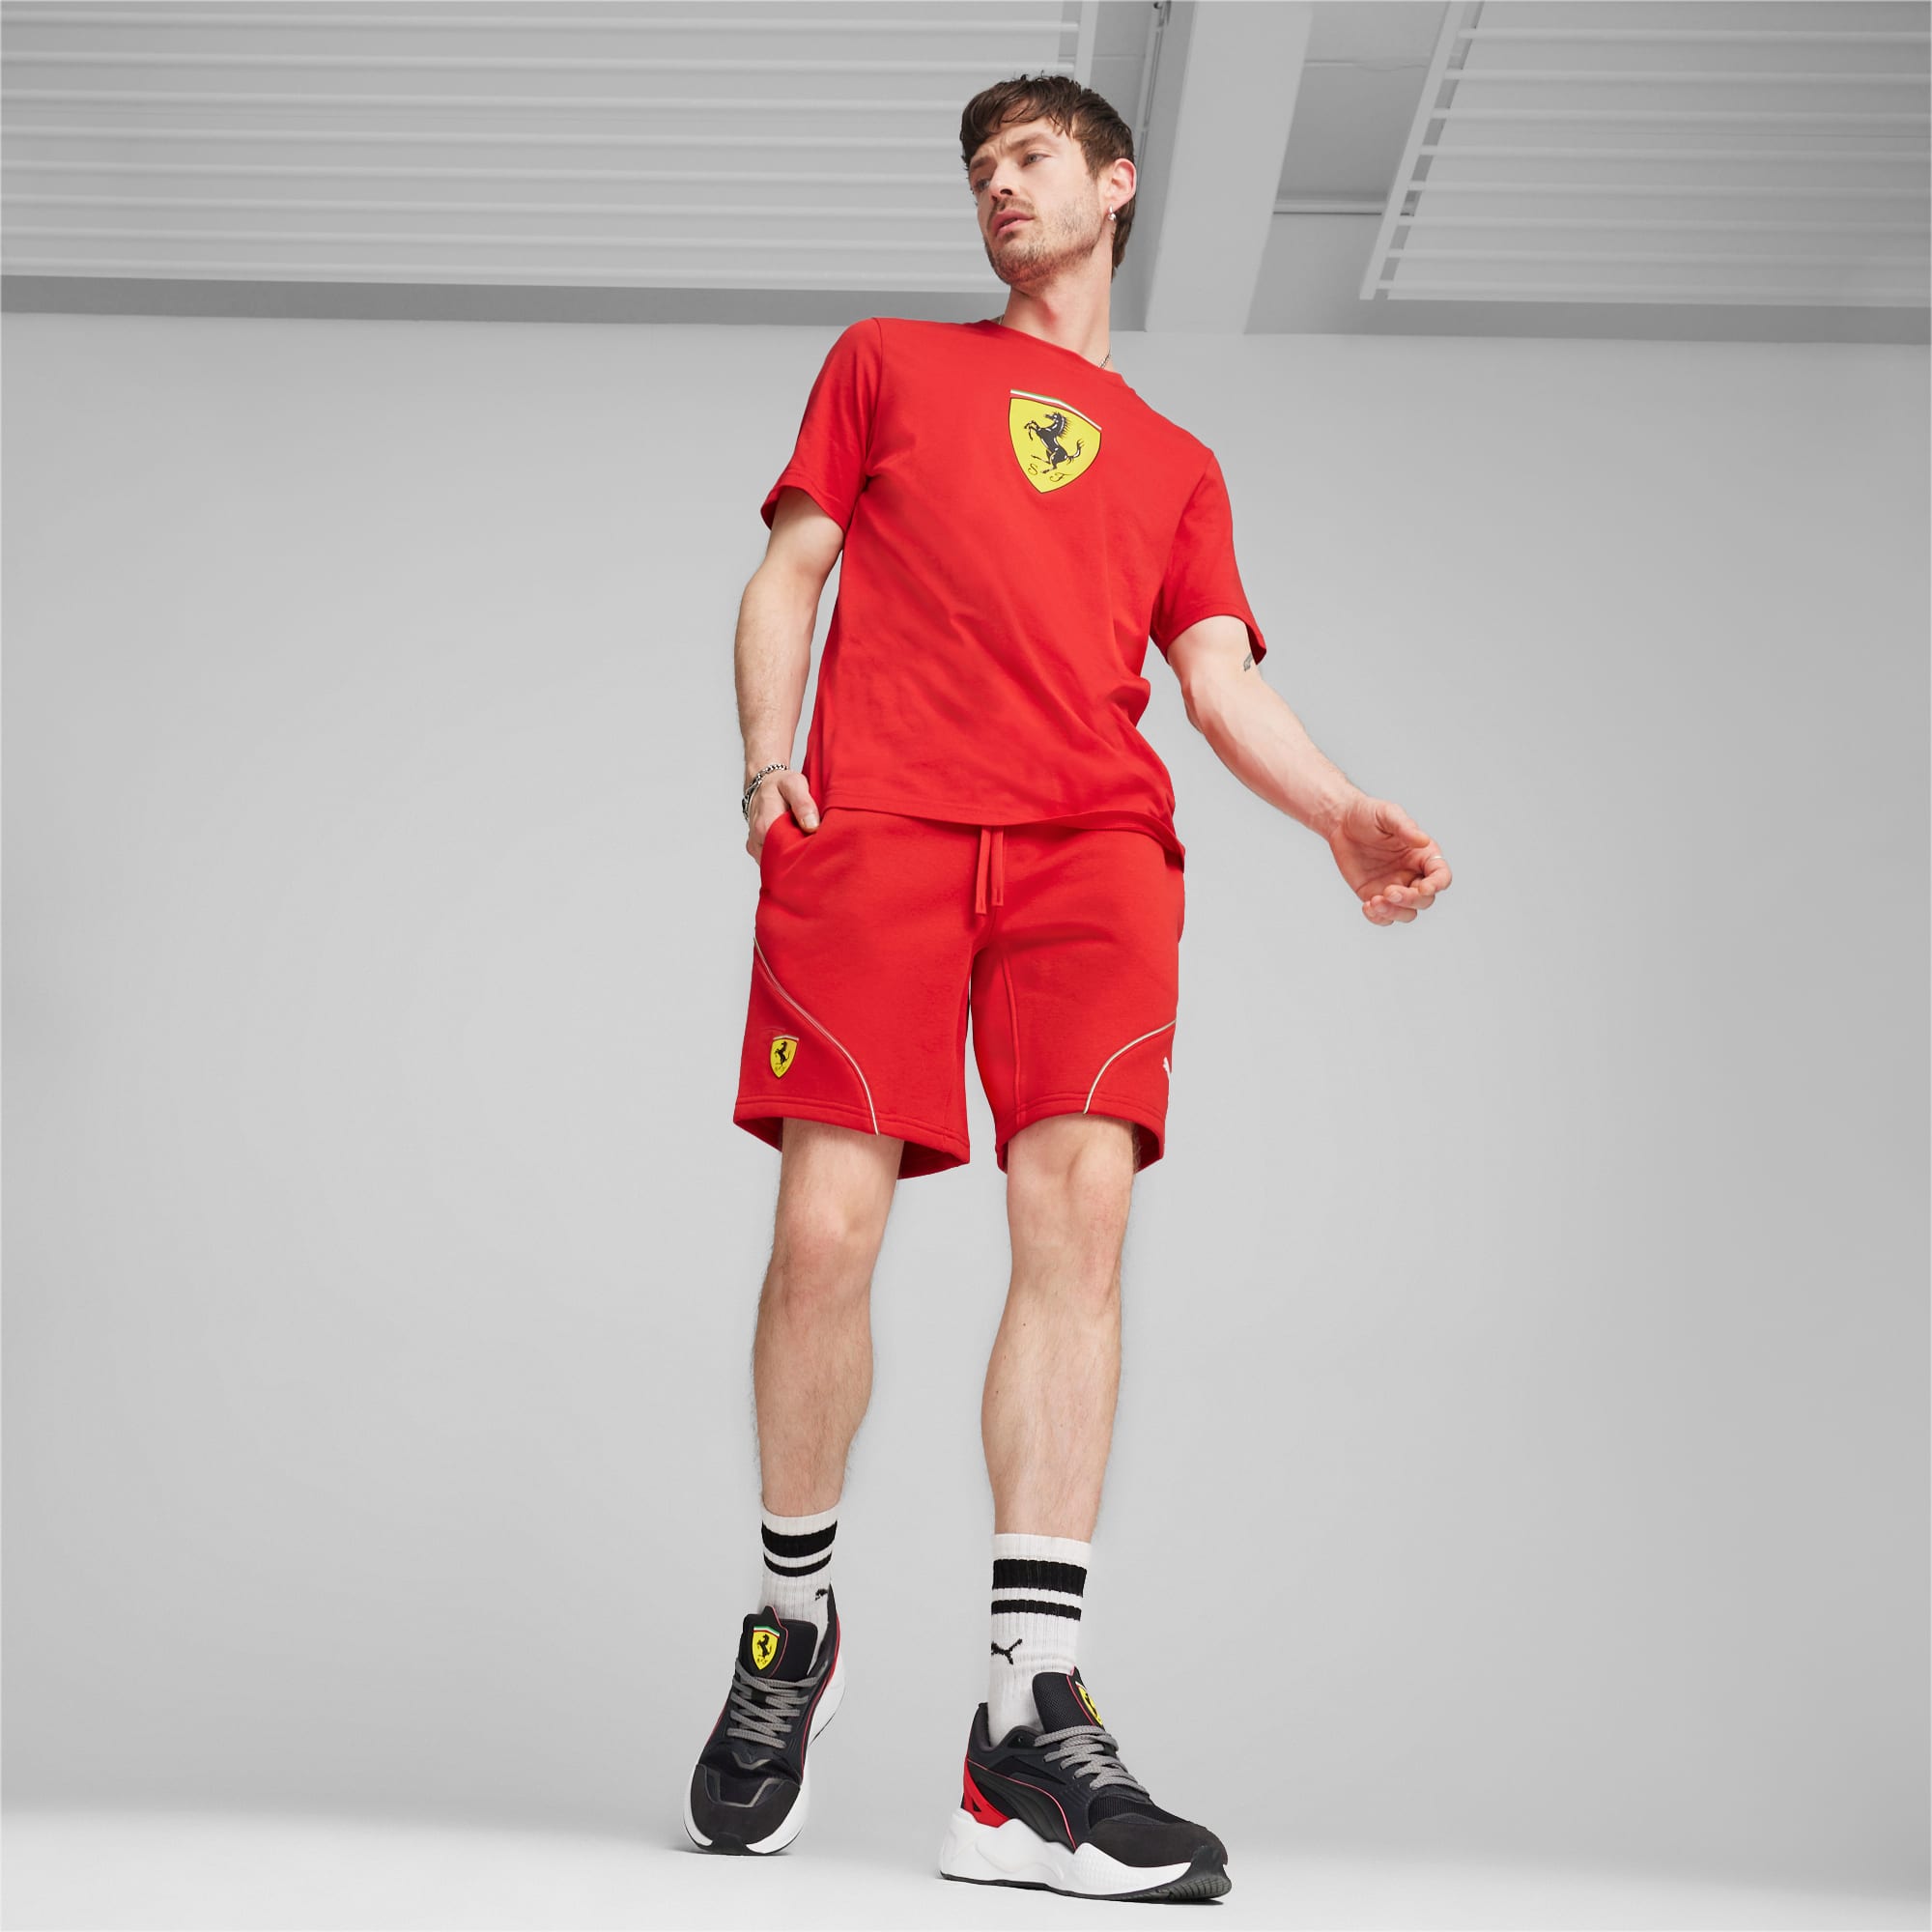 PUMA Scuderia Ferrari Men's Motorsport Race Shorts, Red, Size XS, Clothing